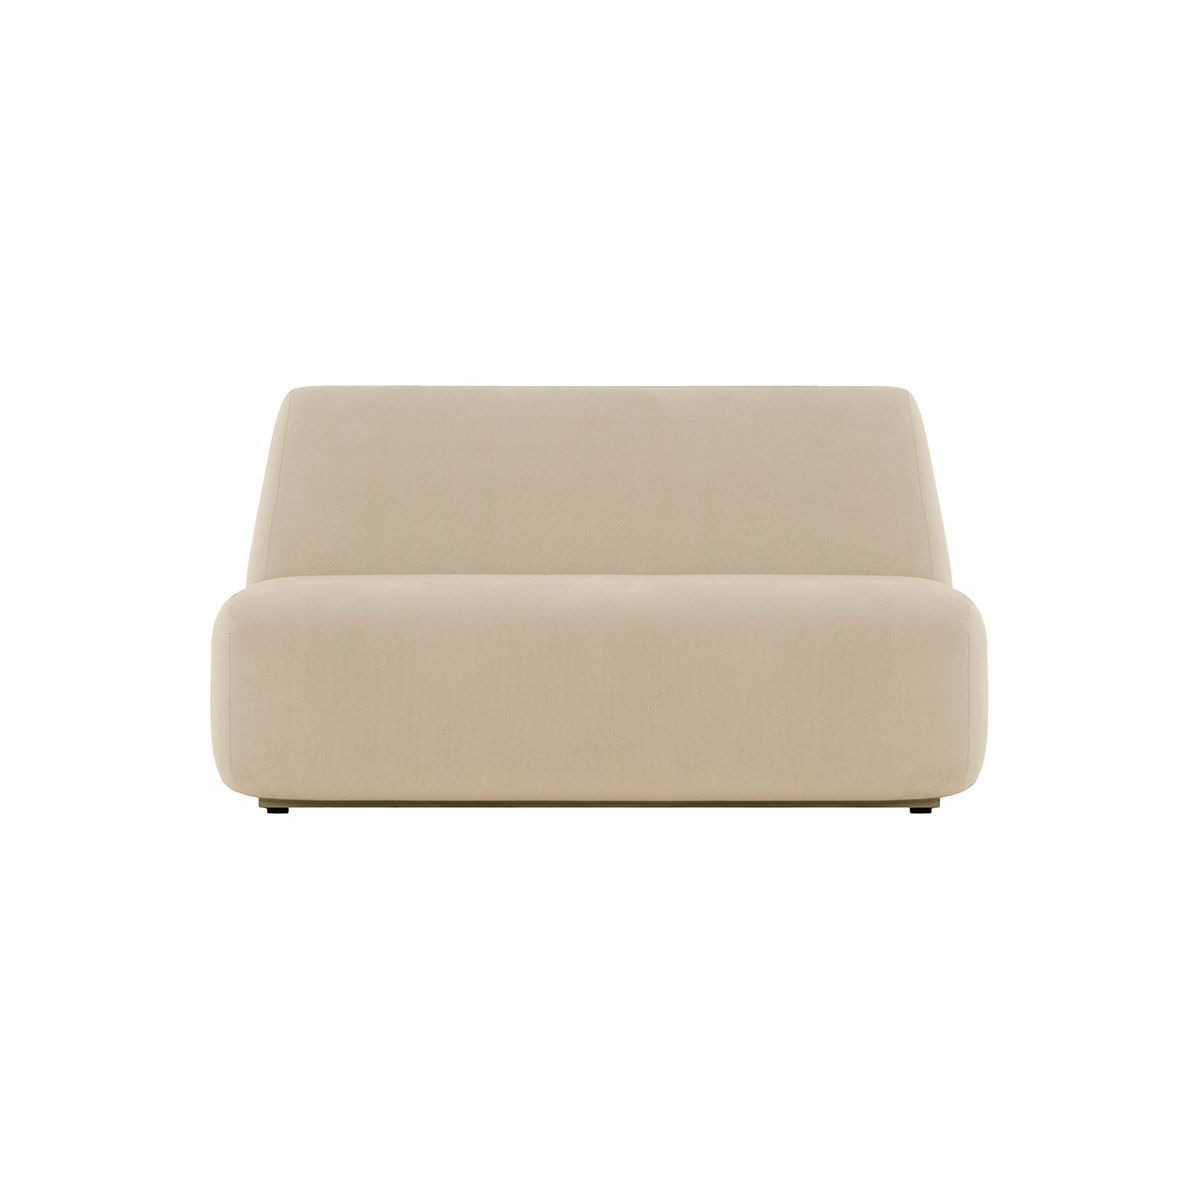 Nist 3 Seater Sofa, light beige - image 1